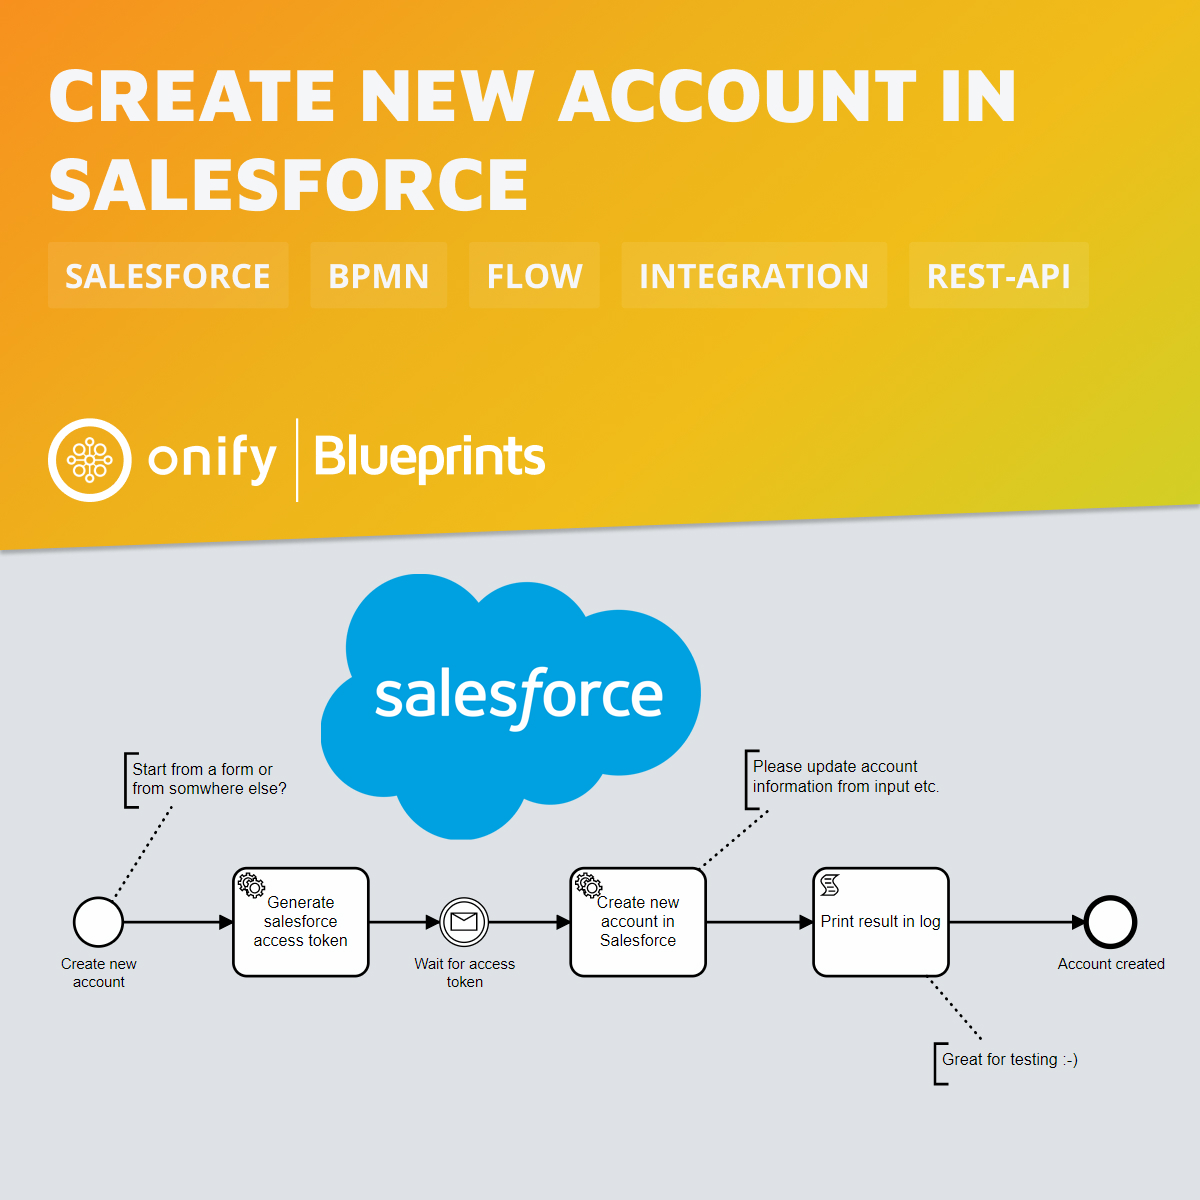 Onify Blueprint – Create new Account in Salesforce via API